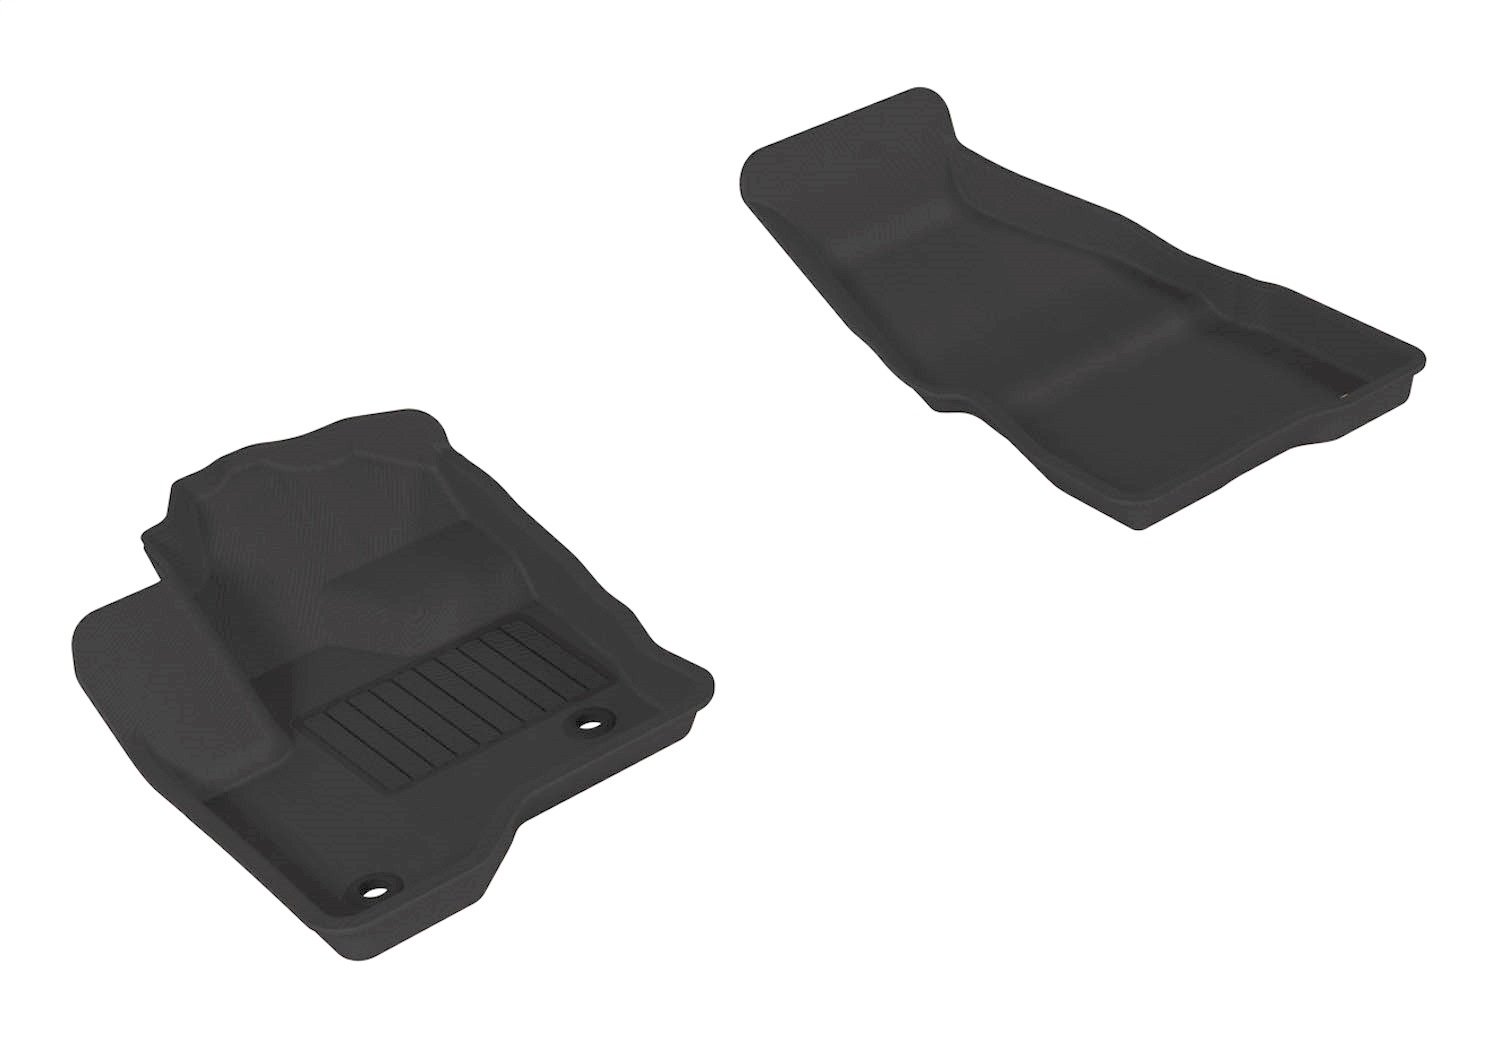 L1FR02111509 KAGU Floor Mat Set for 2009-2019 Ford Flex, 2-Piece, Front [Black]